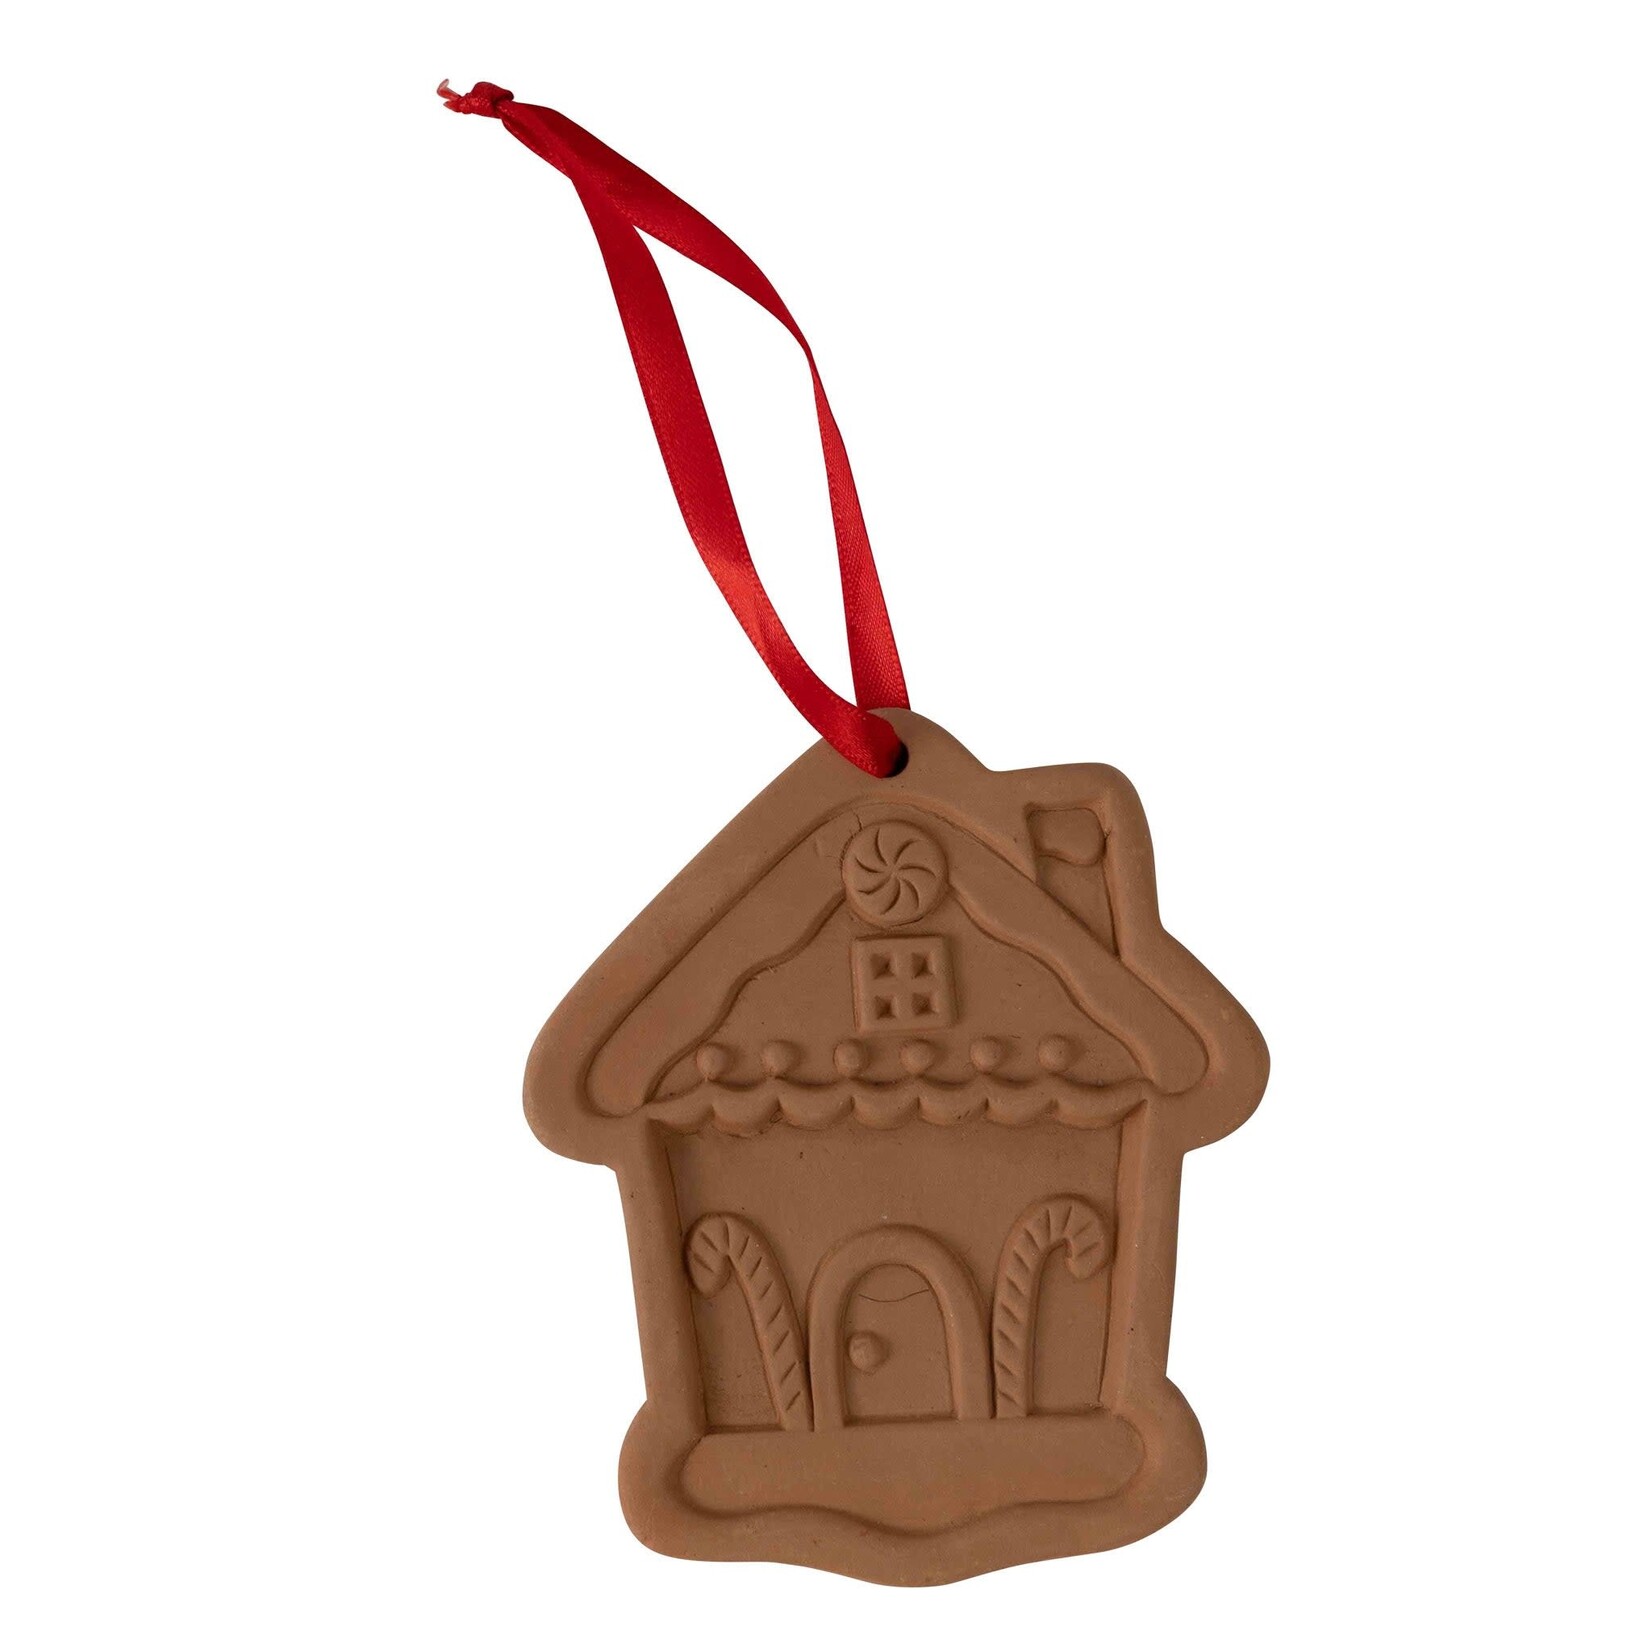 Ten Thousand Villages USA Gingerbread House Ornament